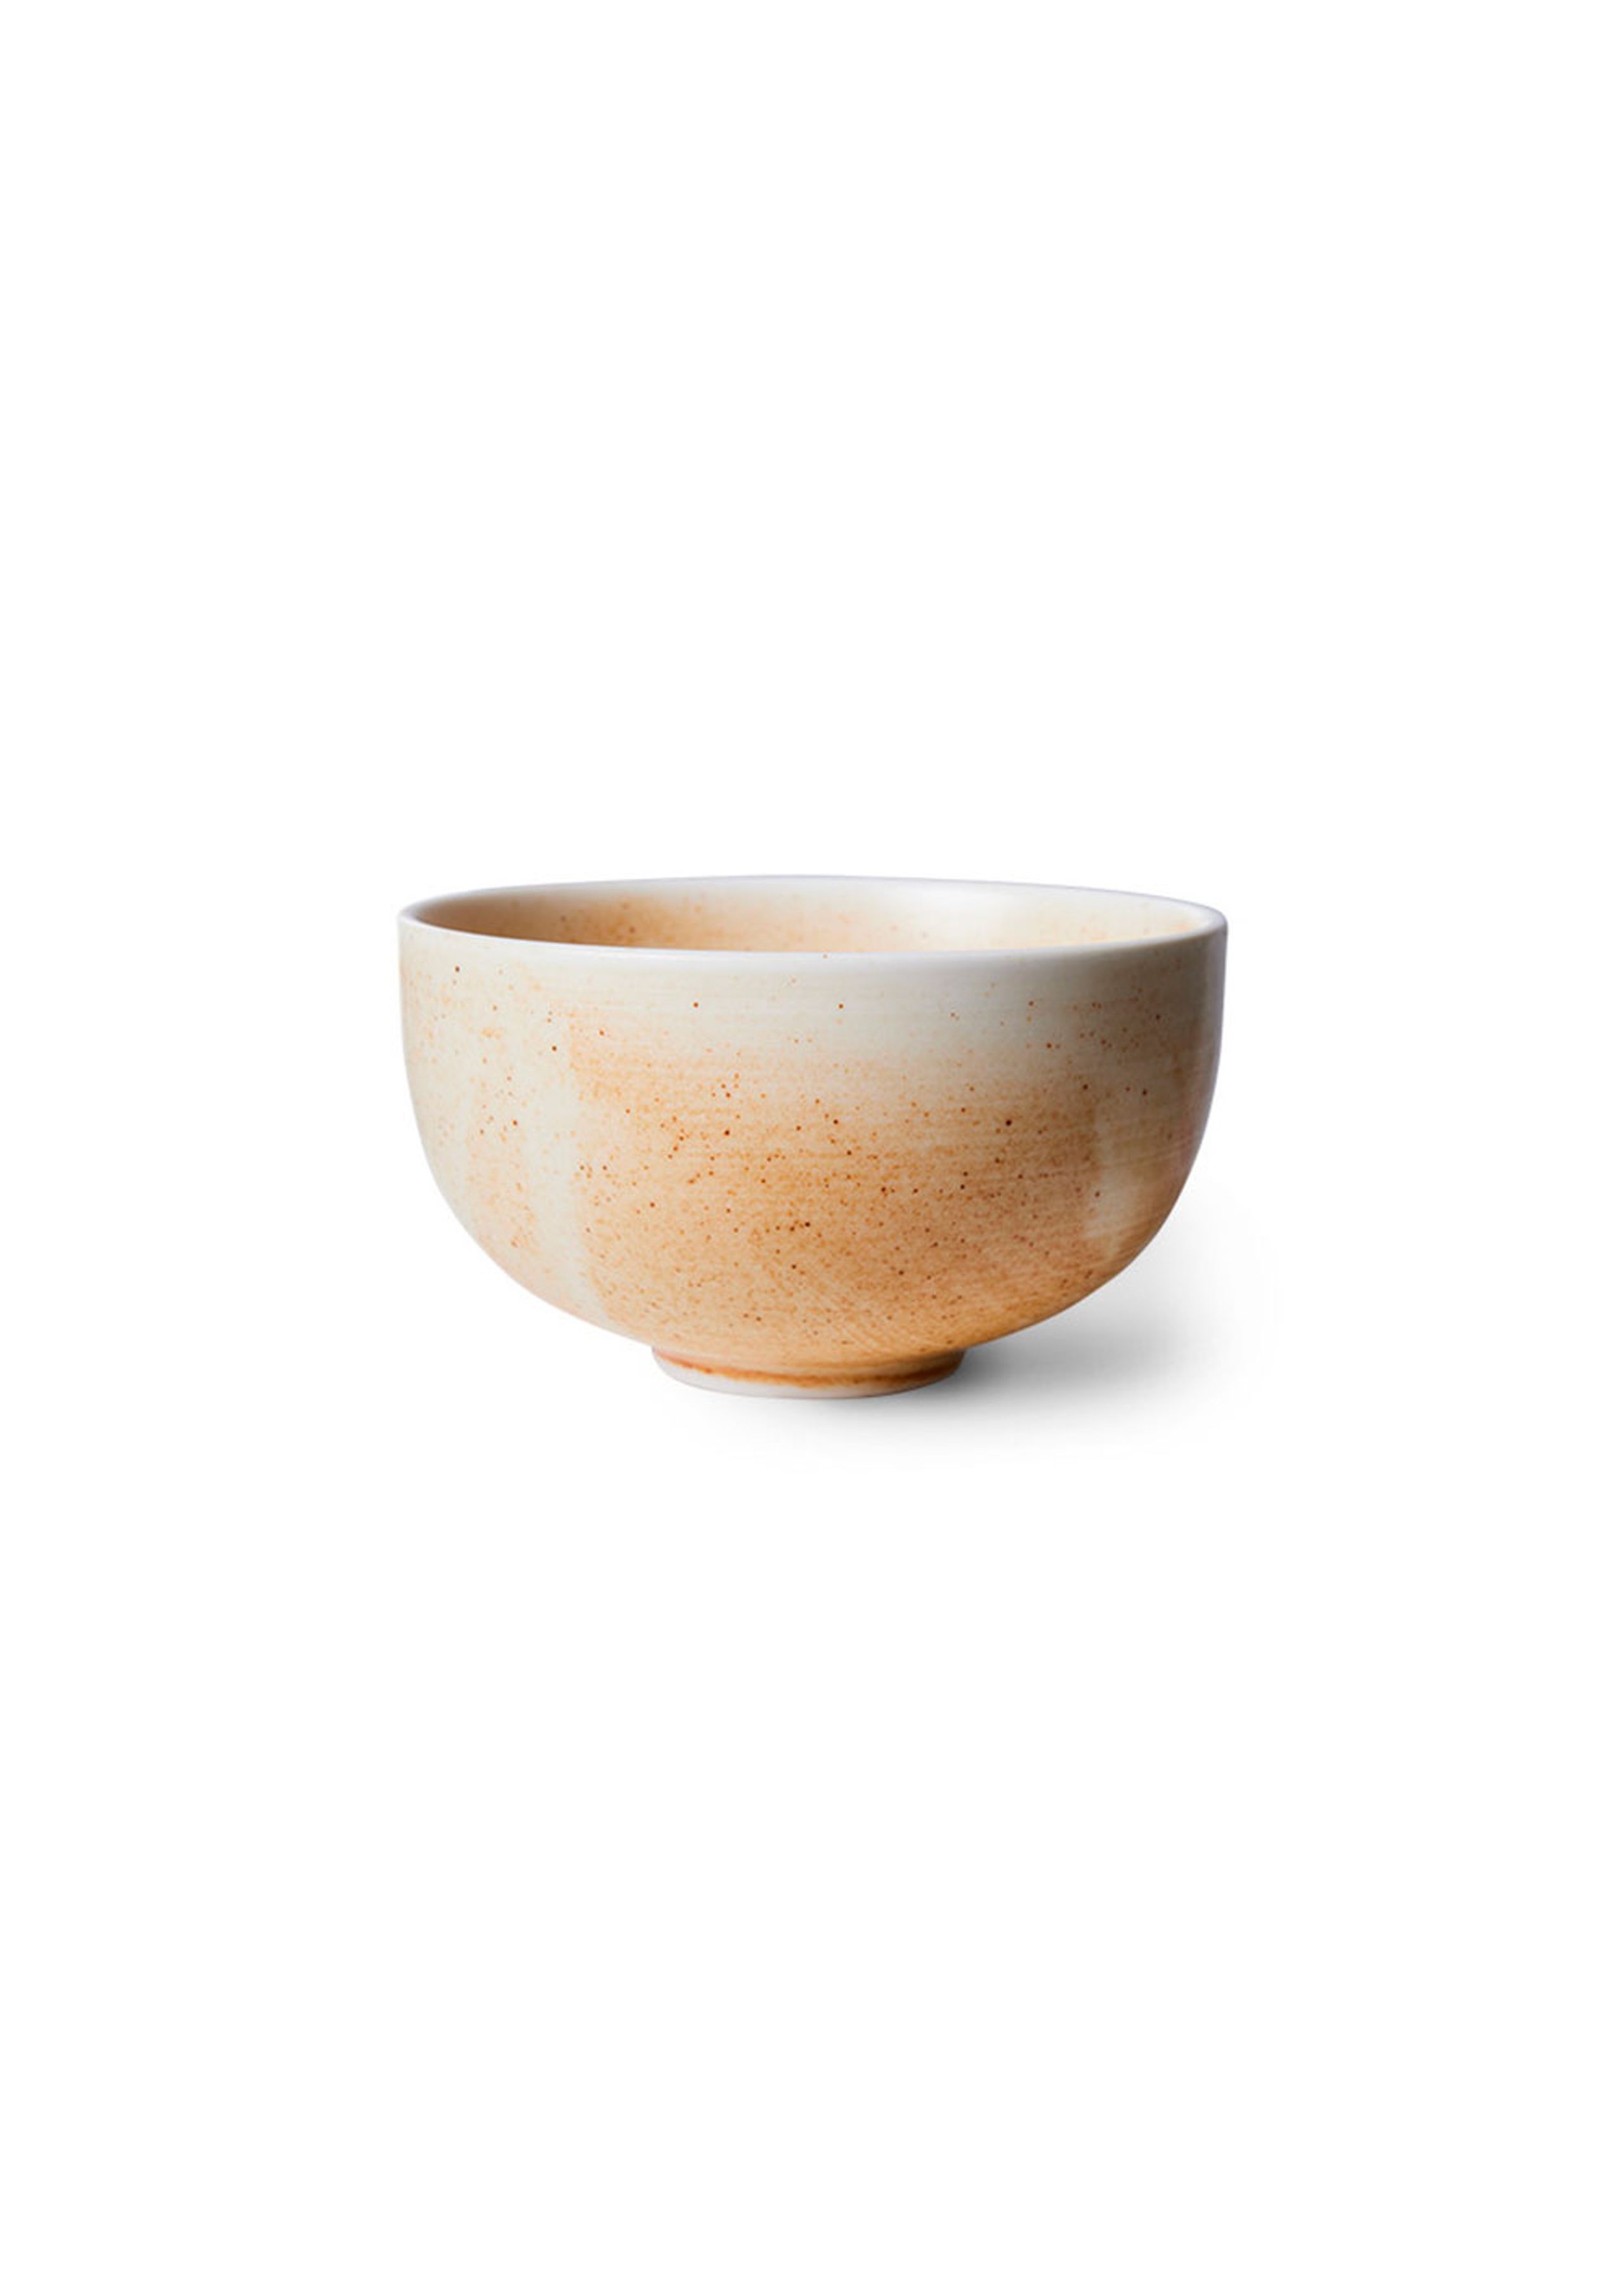 HKLiving - Schüssel - Chef Ceramics - Bowl - Rustic Cream/Brown